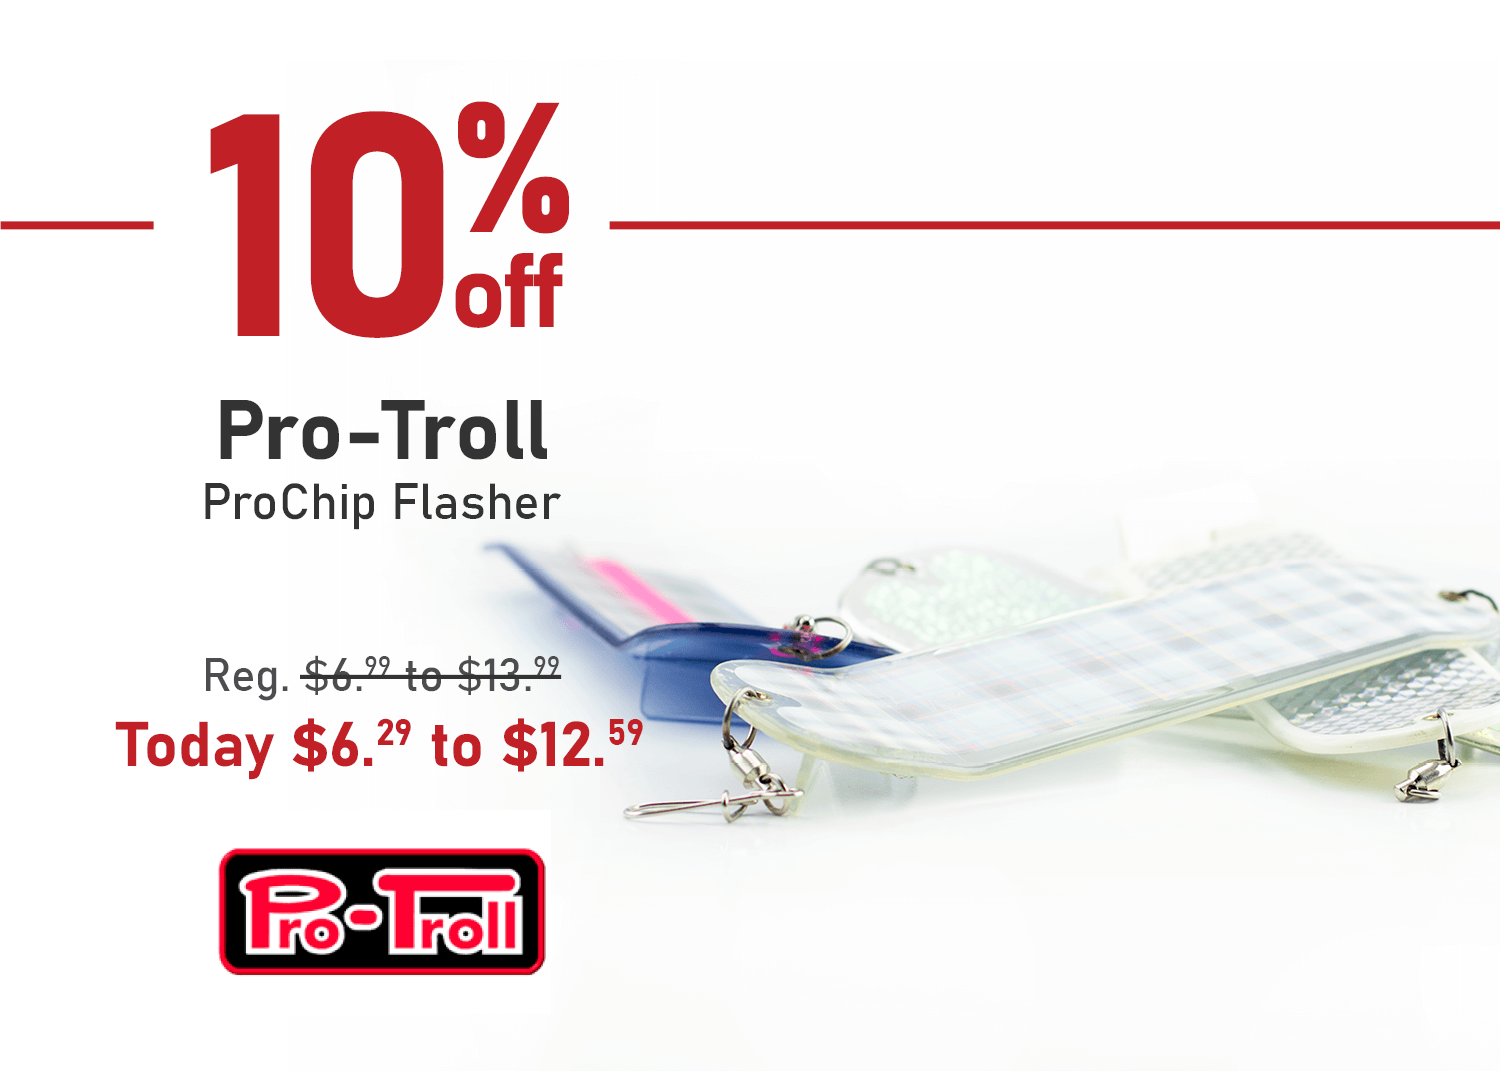 Take 10% off the Pro-Troll ProChip Flasher